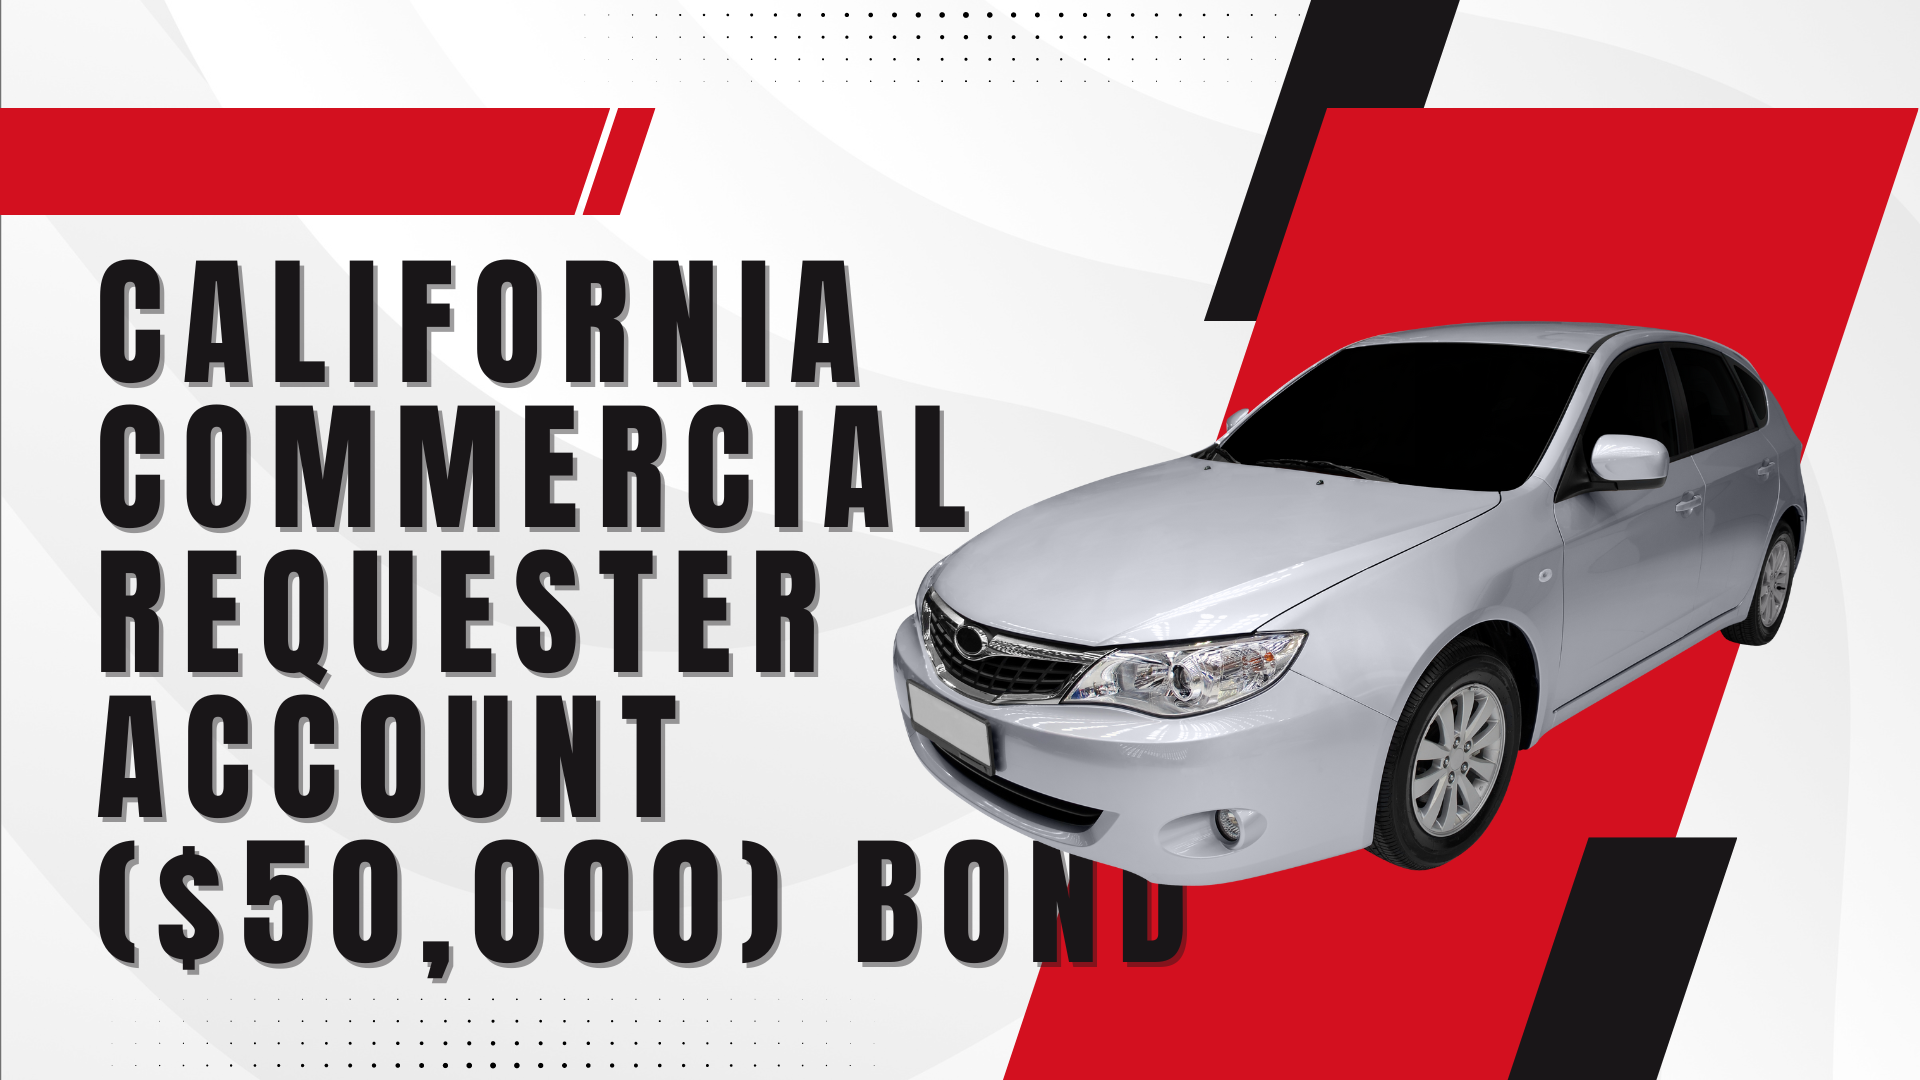 Surety Bond-California Commercial Requester Account ($50,000) Bond